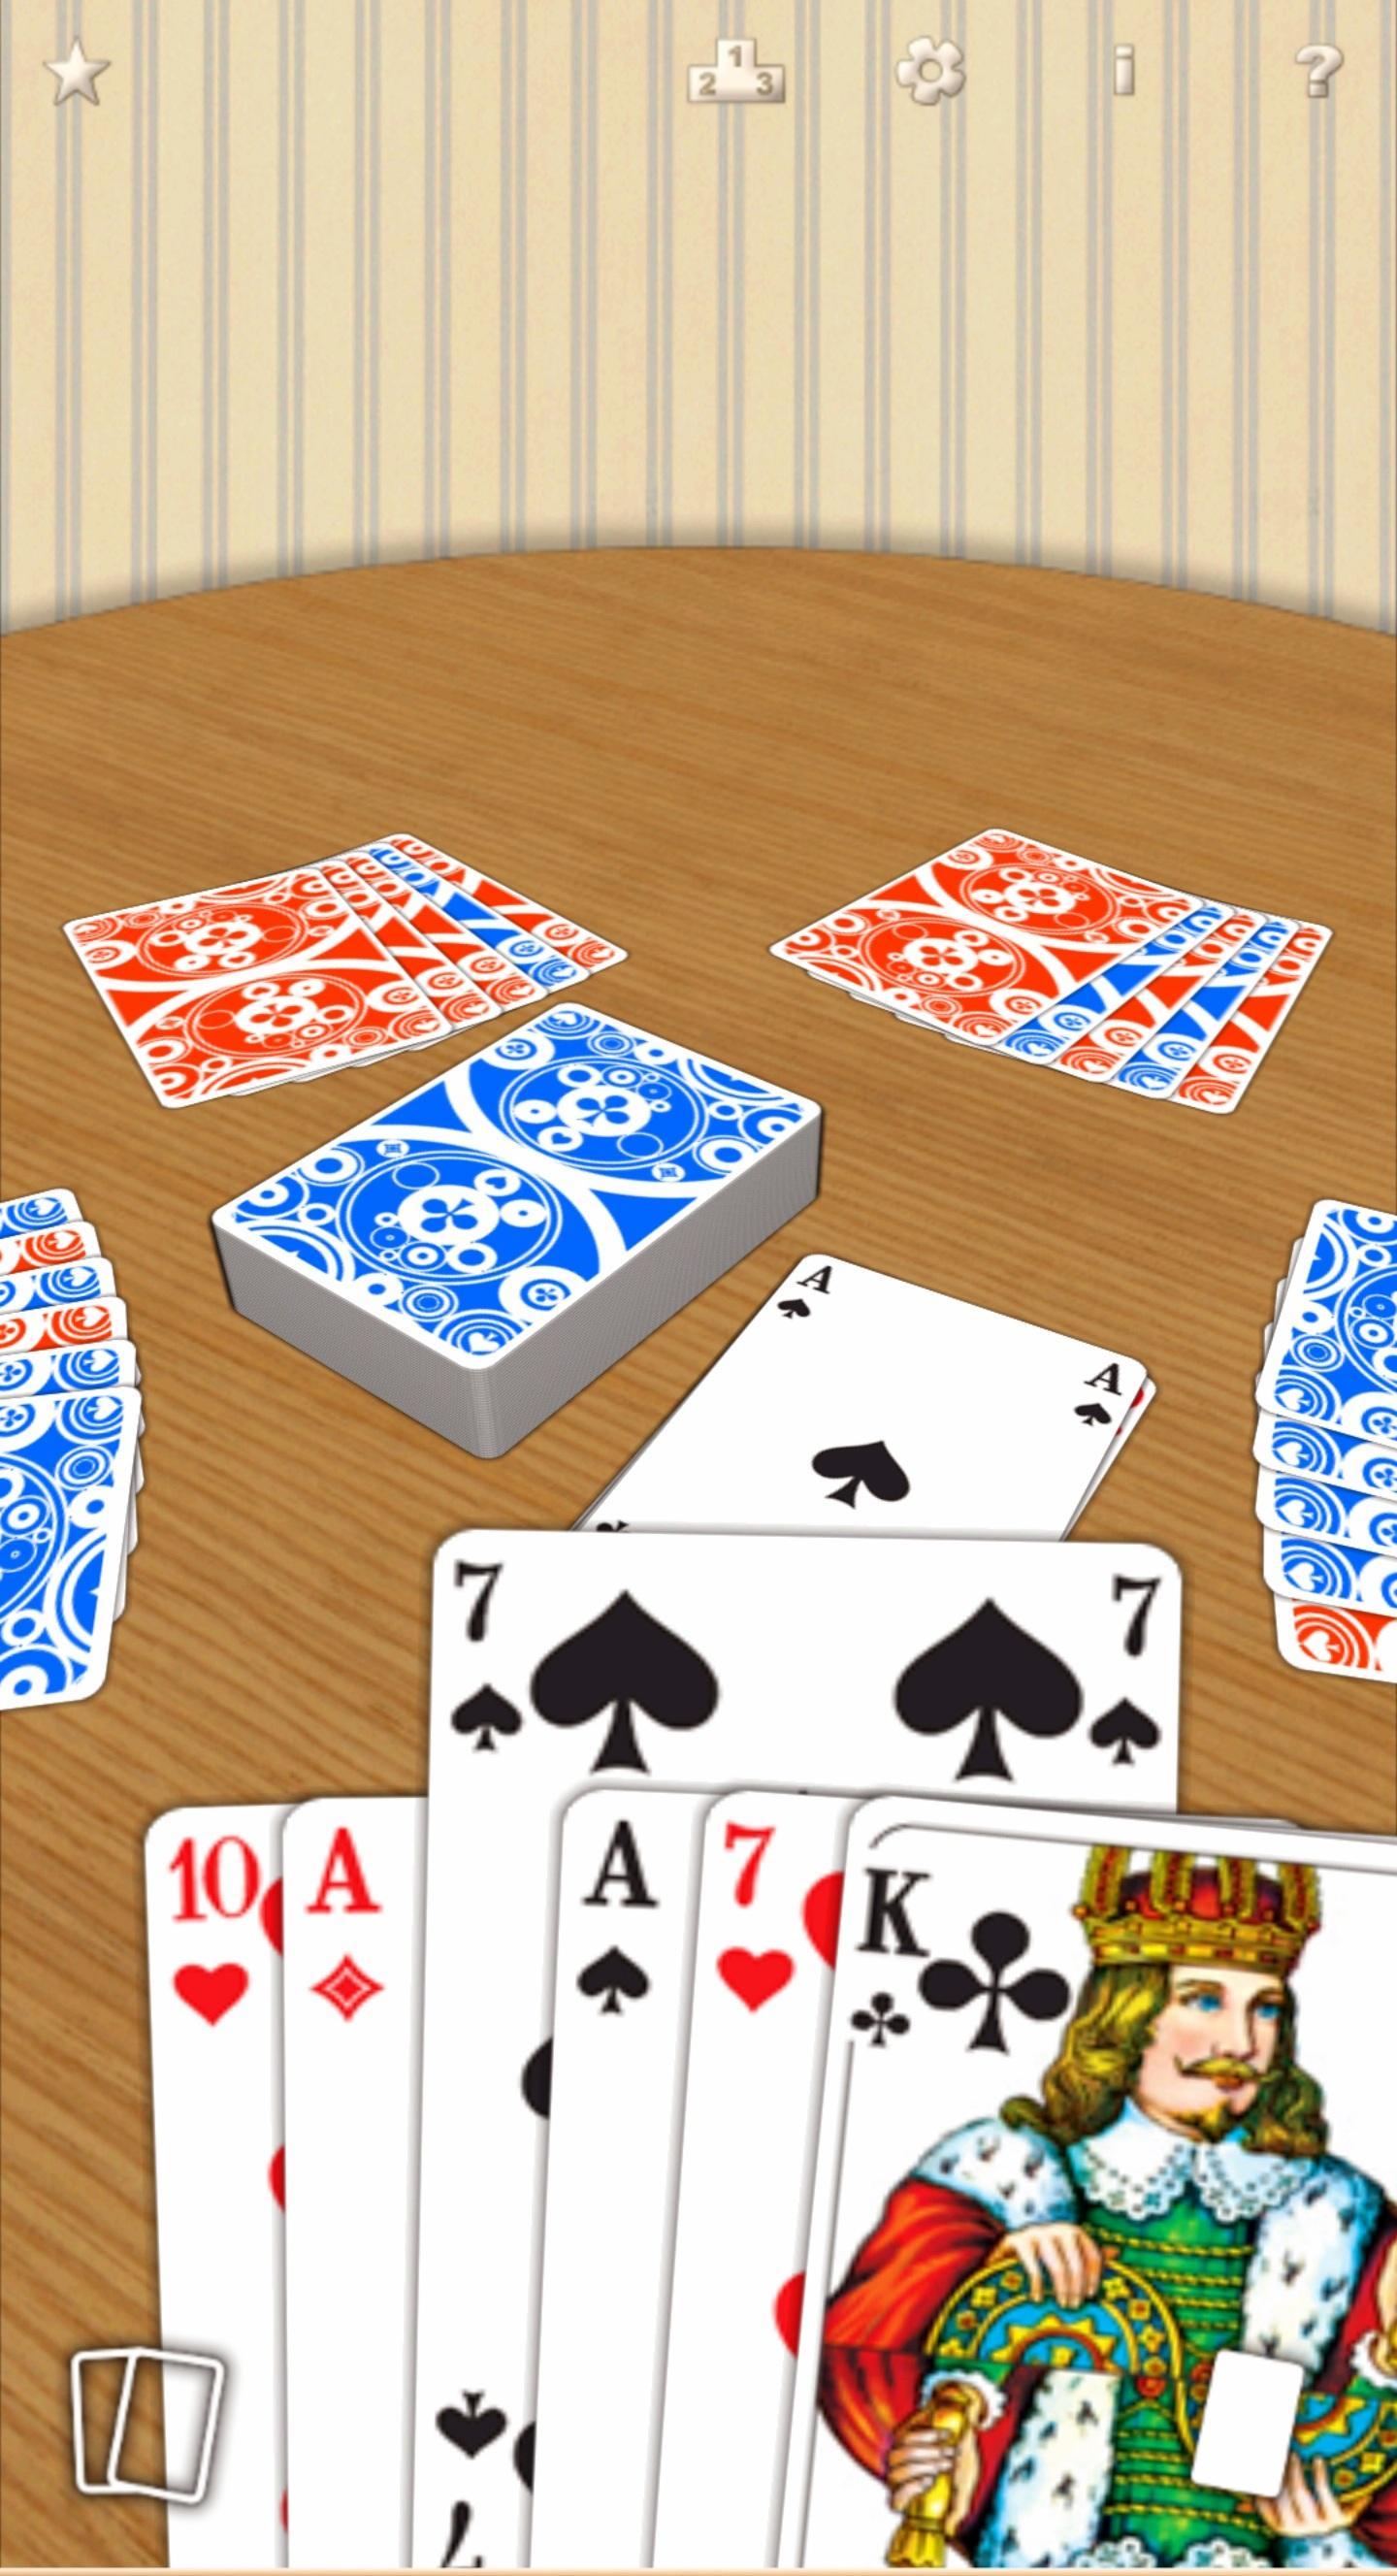 Crazy Eights free card game 1.6.96 Screenshot 12